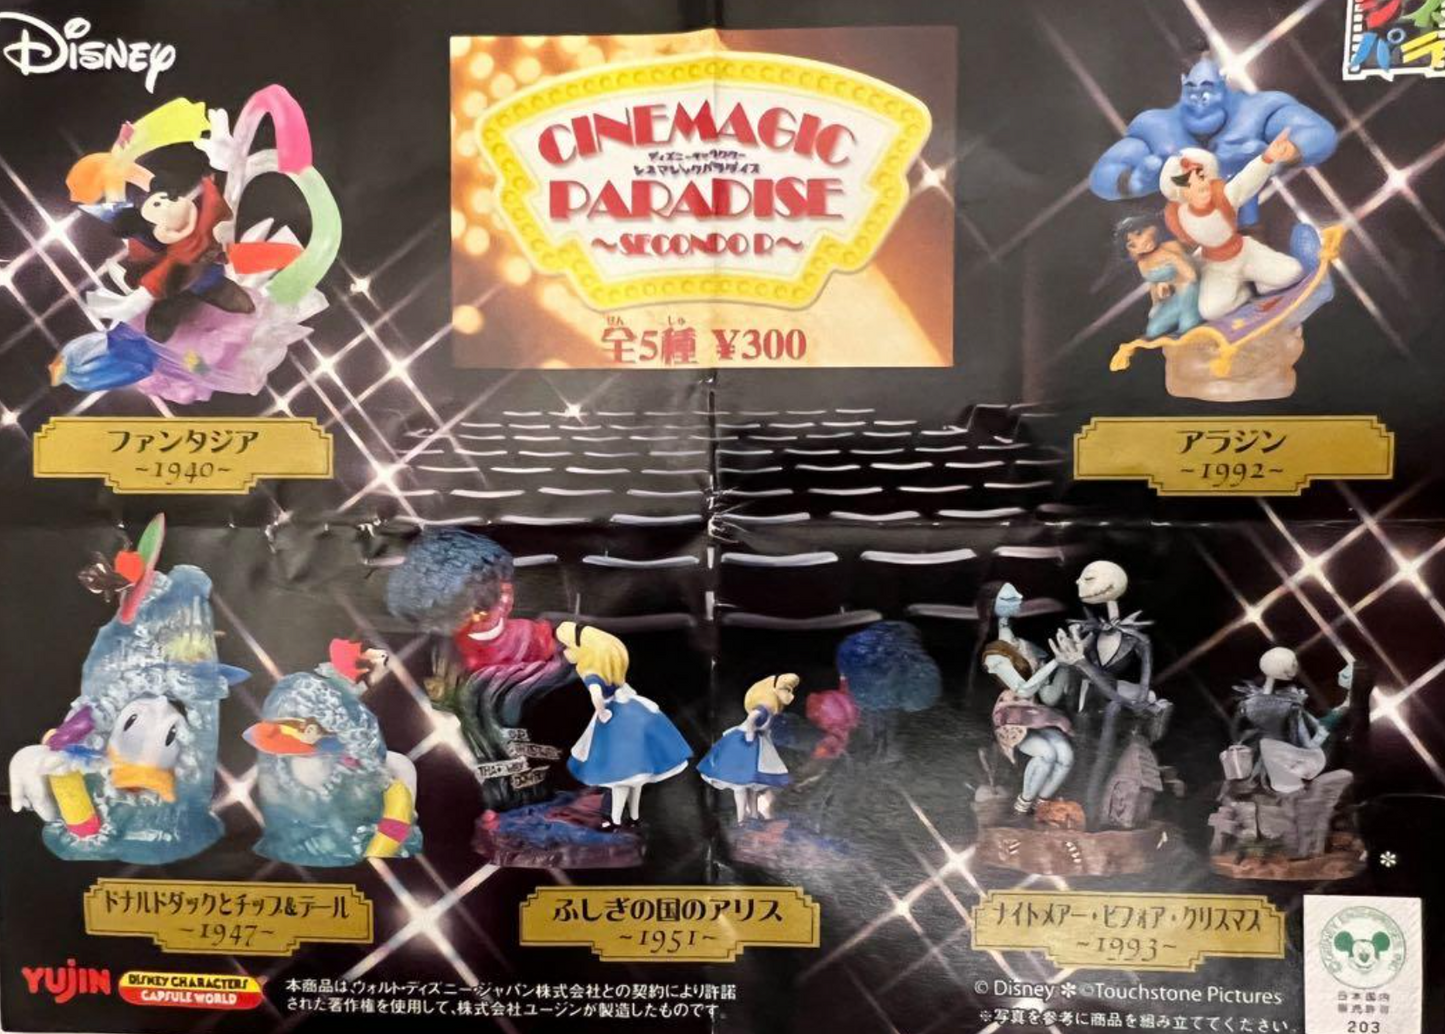 Yujin Disney Characters Capsule World Cinemagic Paradise Secondor 5 Mini Figure Set